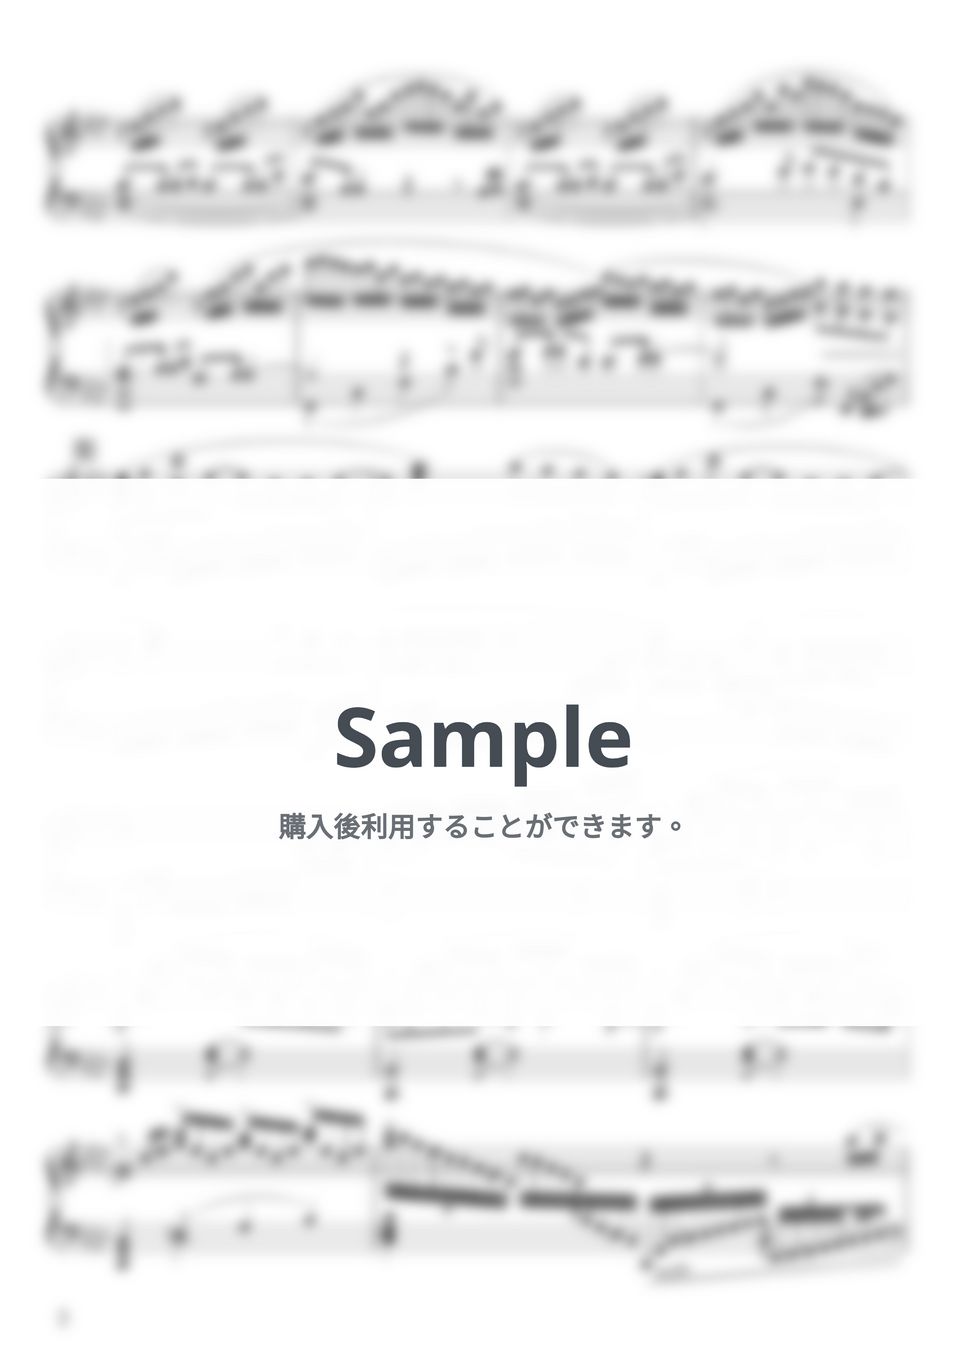 Aimer - Fate/stay night: Heaven's Feel メドレー 花の唄 - I beg you - 春はゆく by Animenz